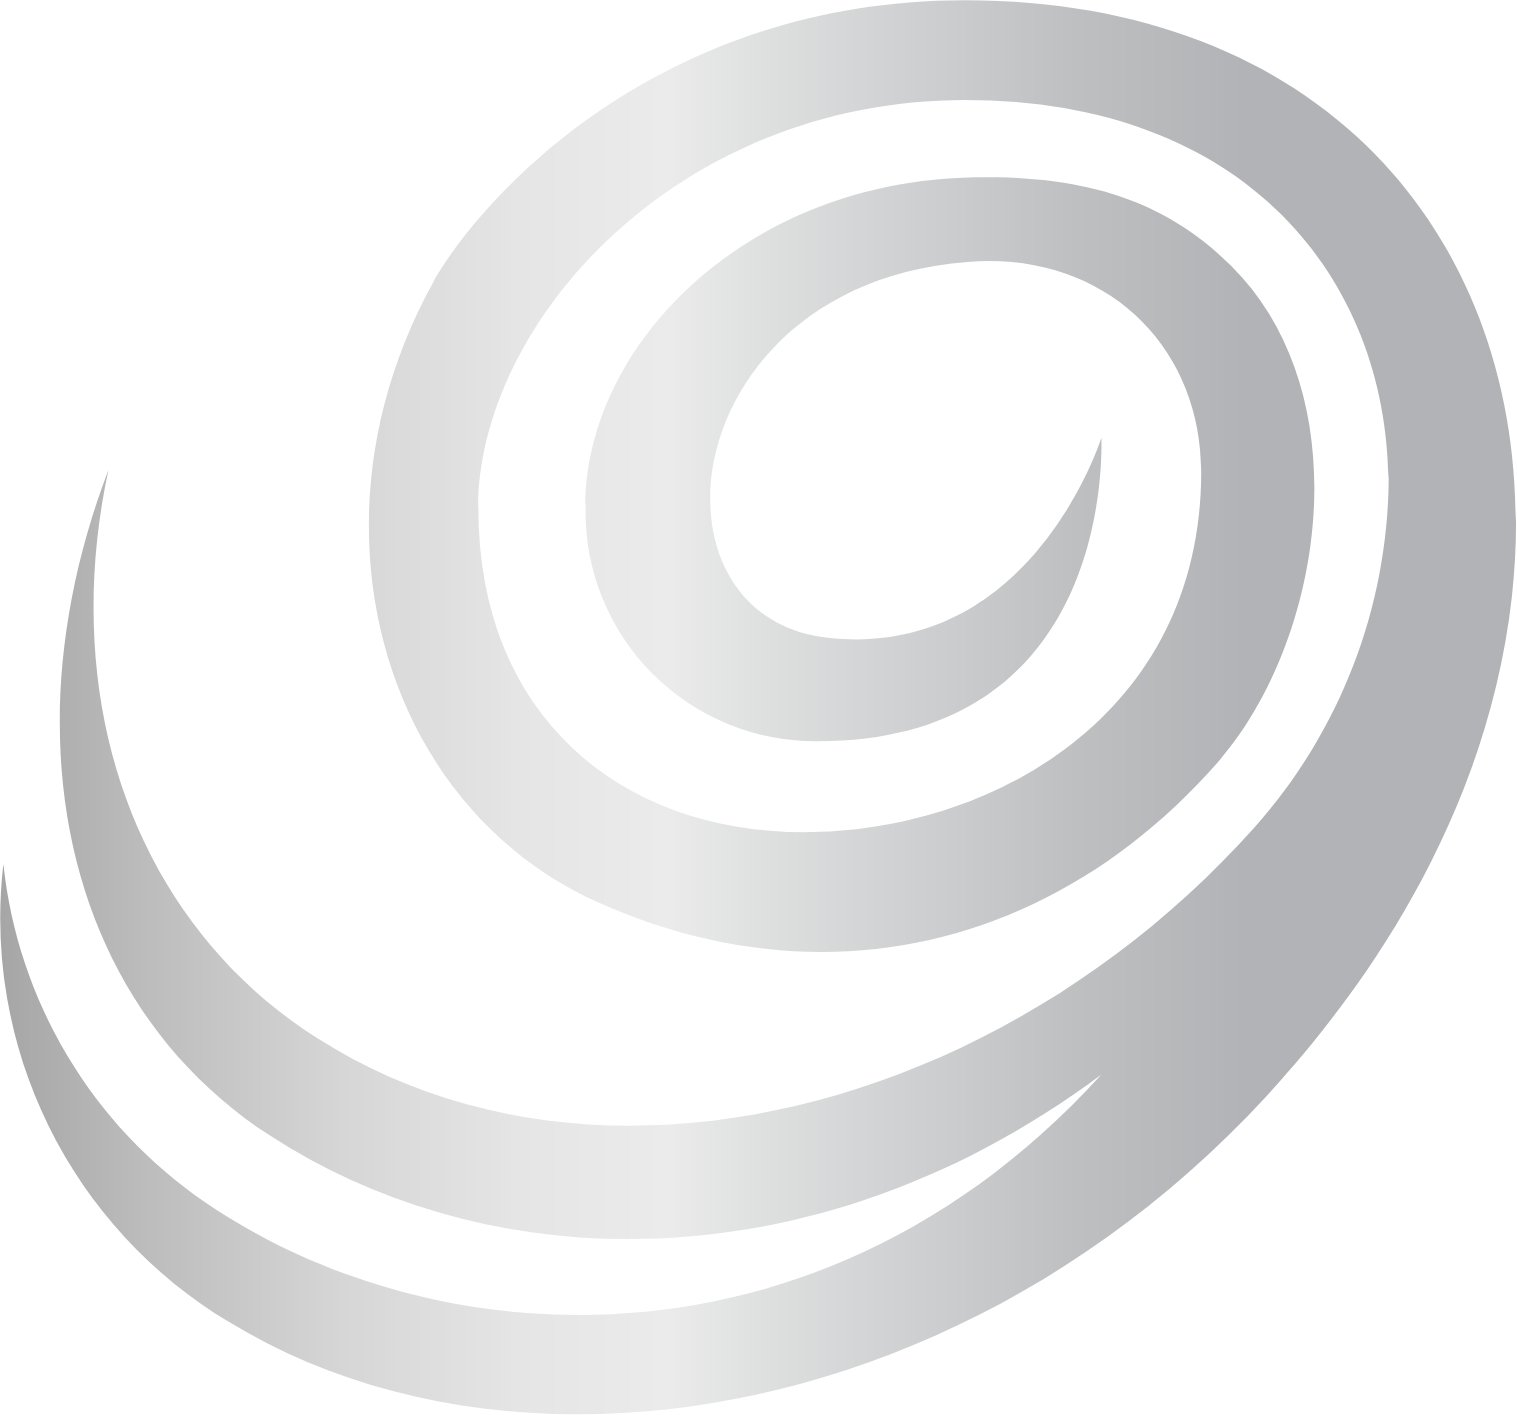 Zain (Mobile Telecommunications Company) logo (transparent PNG)